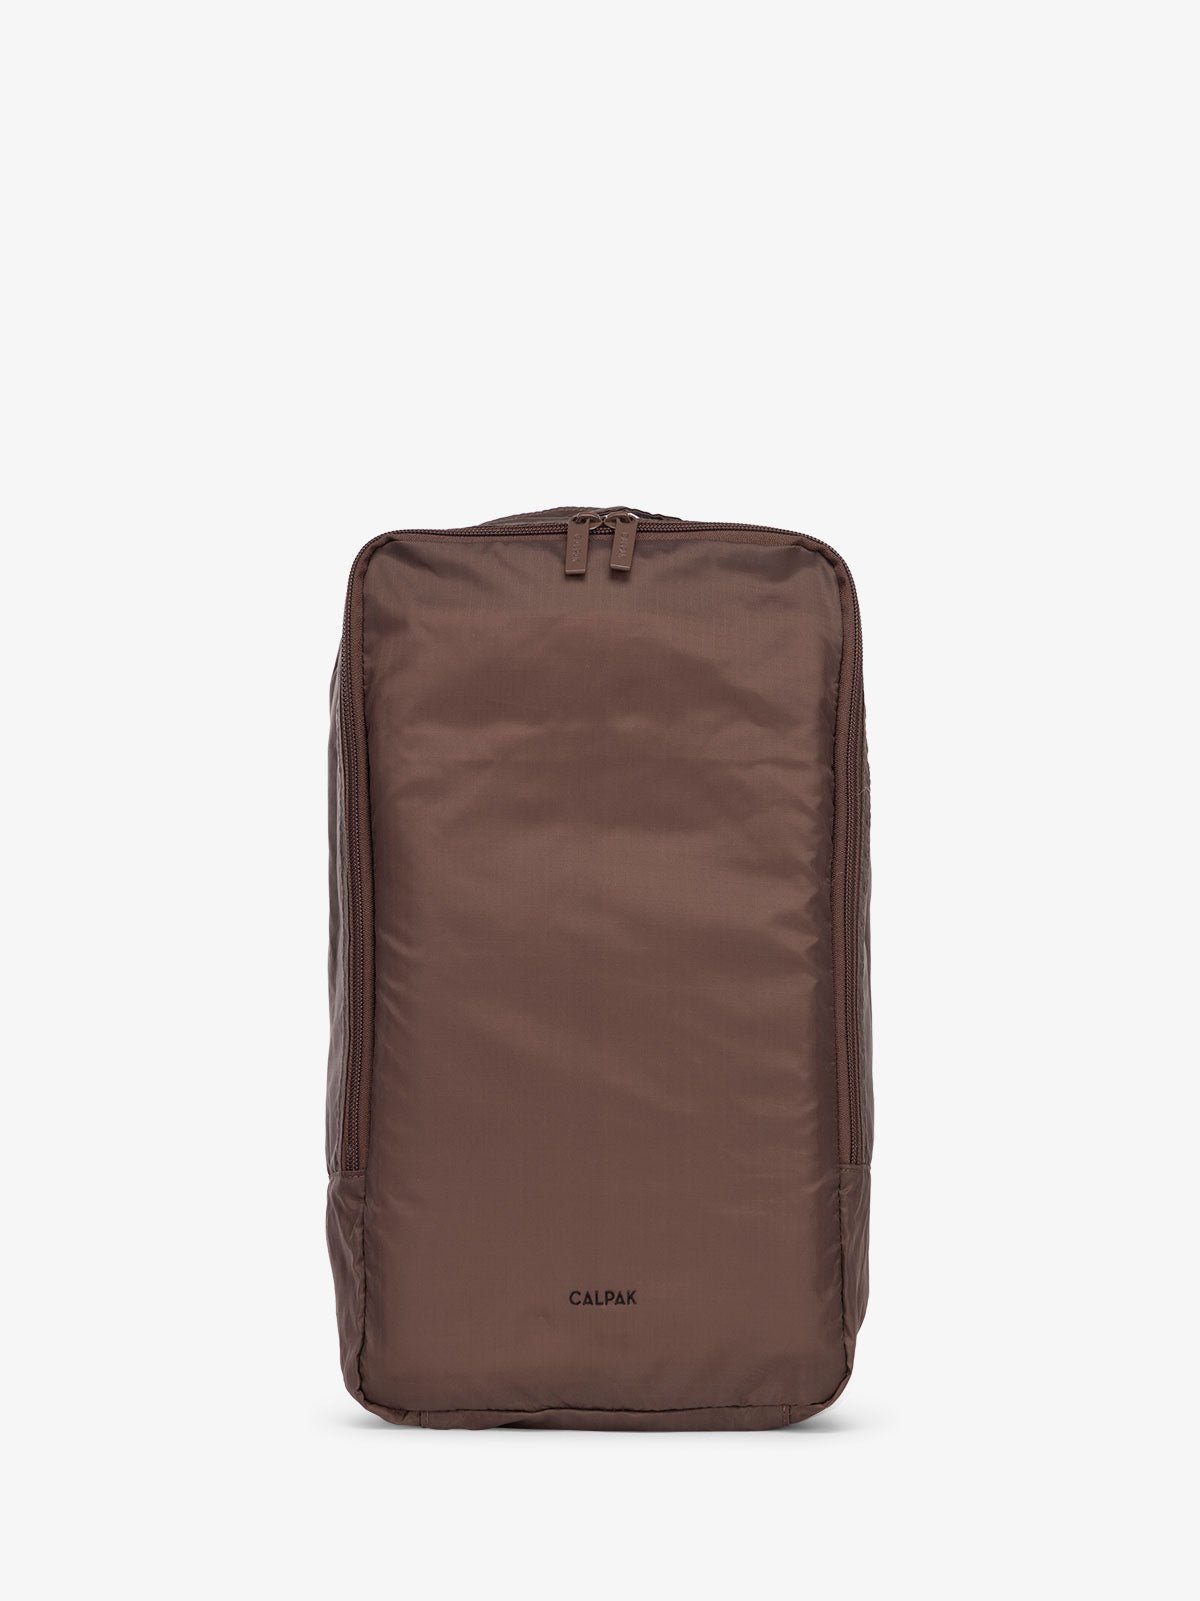 CALPAK Compakt shoe storage travel bag with handle in walnut brown